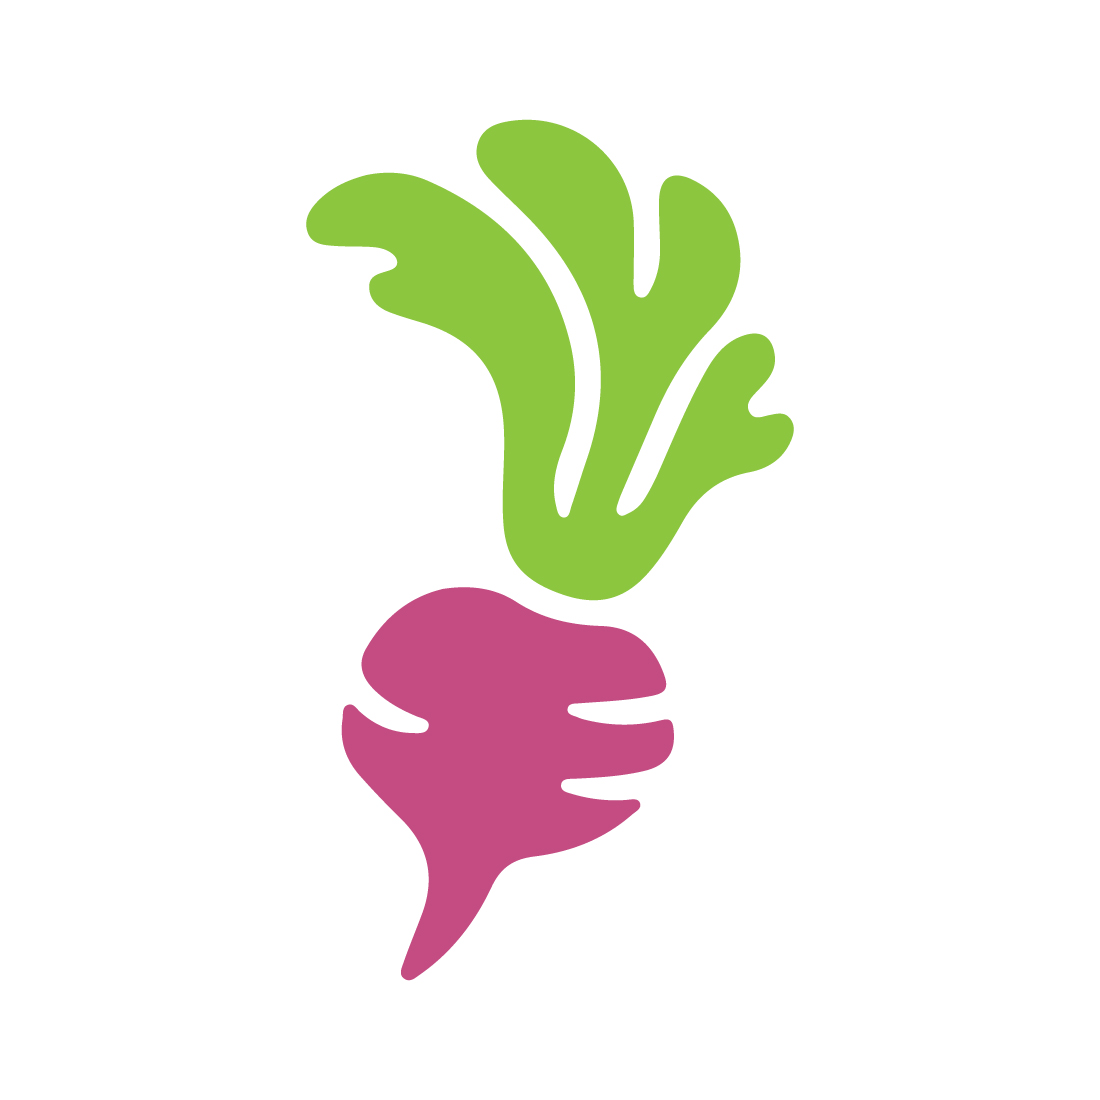 Vegetable icon logo design cover image.